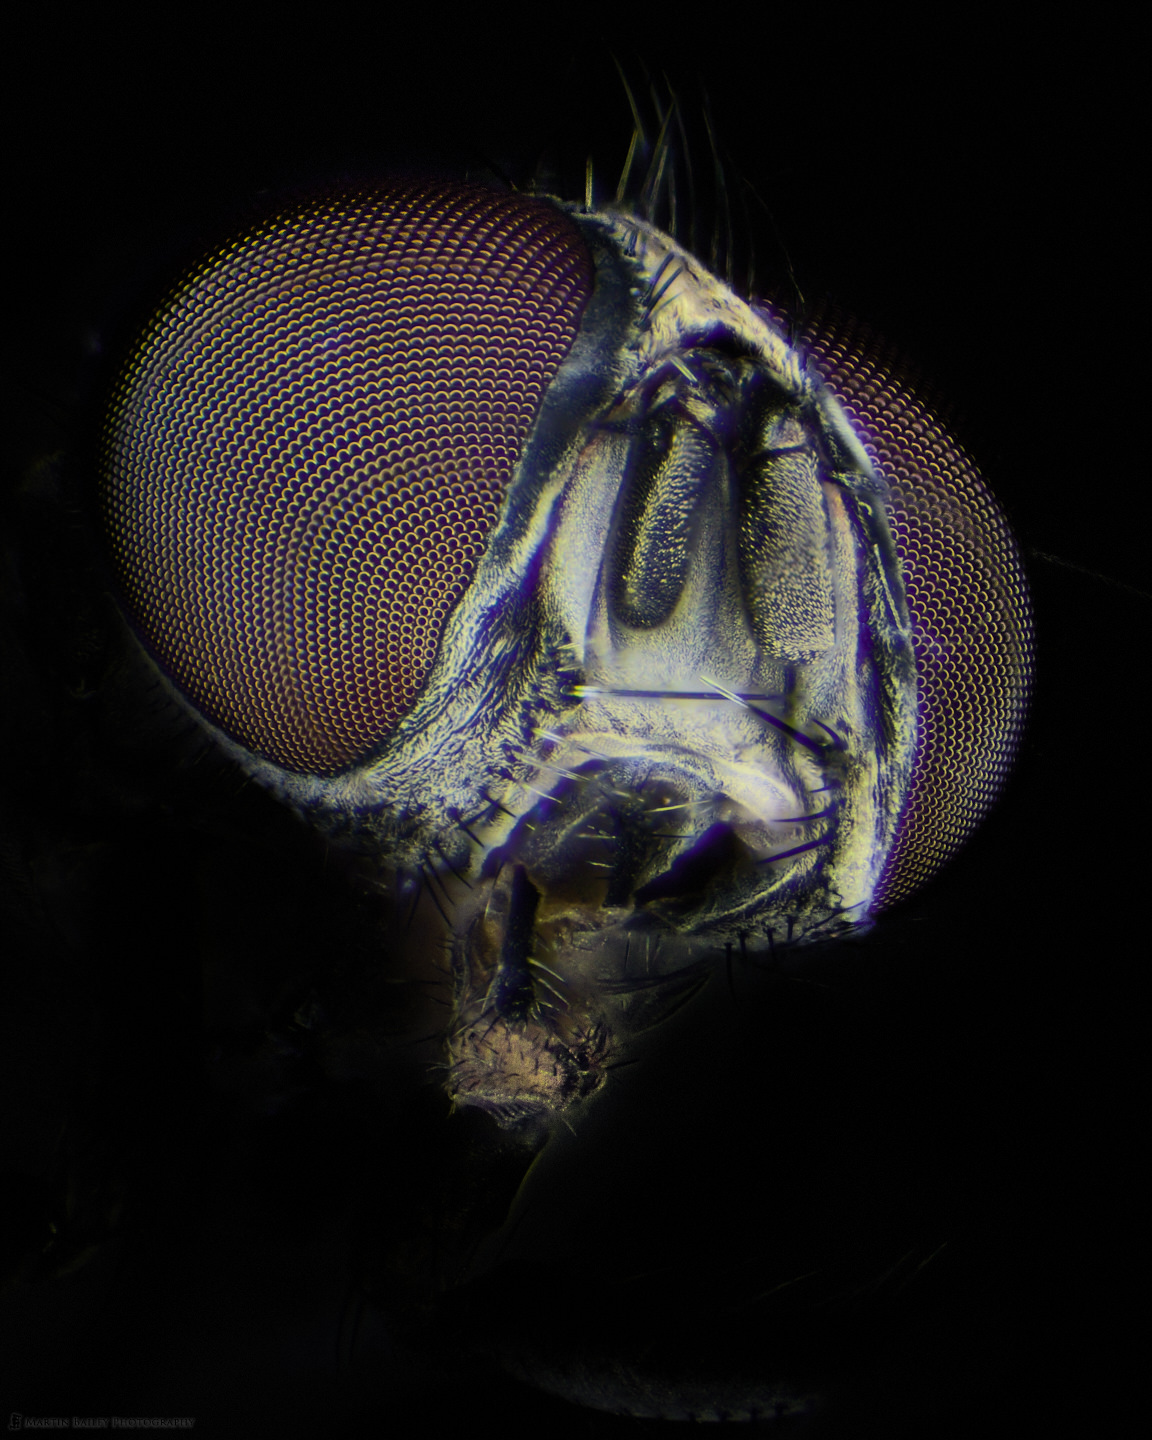 Common Housefly (60X Stereo Microscope)